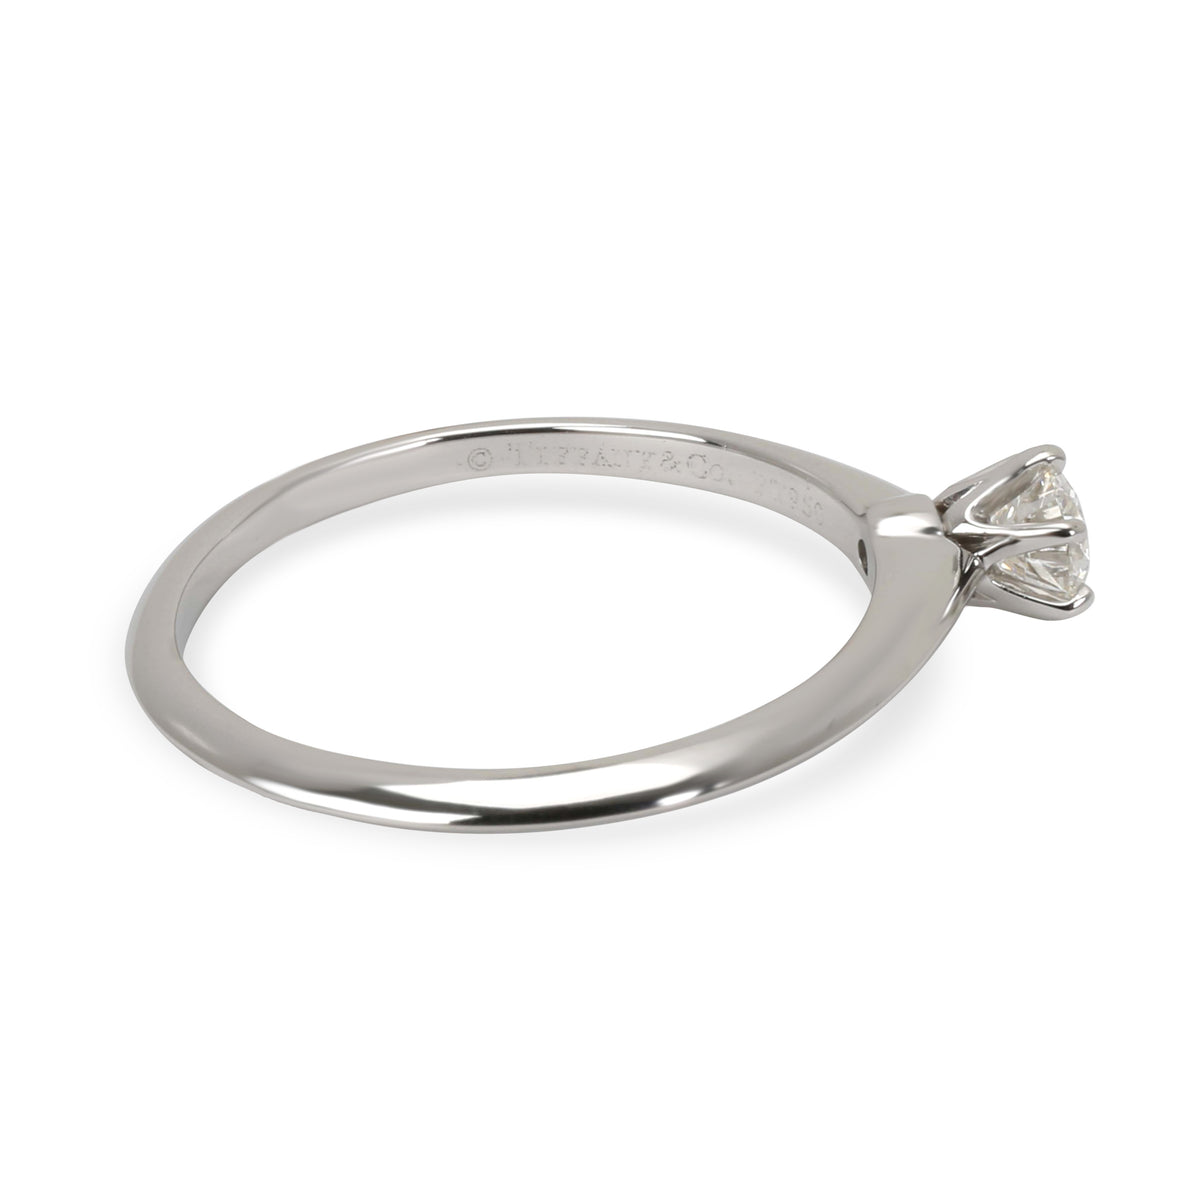 Tiffany & Co. Solitaire Diamond Engagement Ring in  Platinum I VS1 0.35 CTW